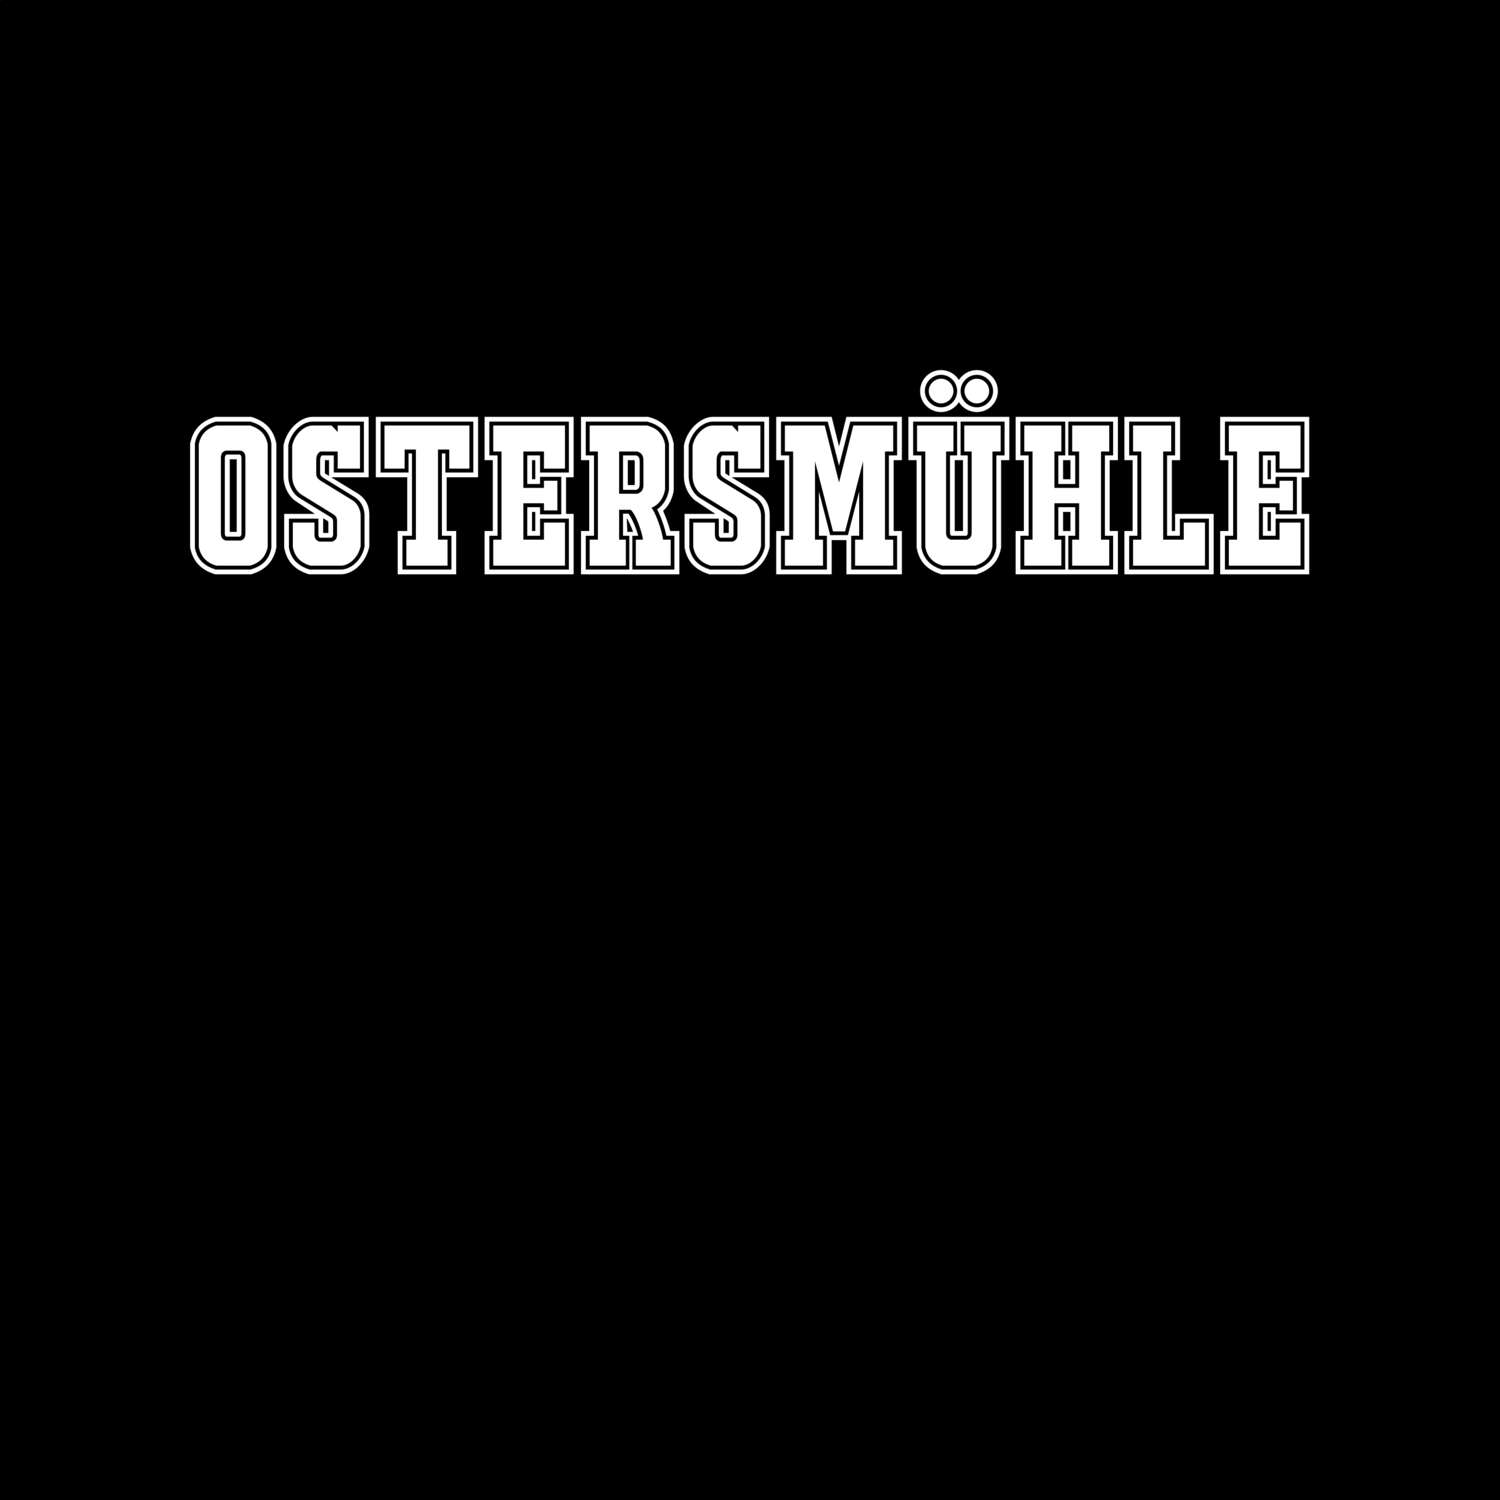 Ostersmühle T-Shirt »Classic«